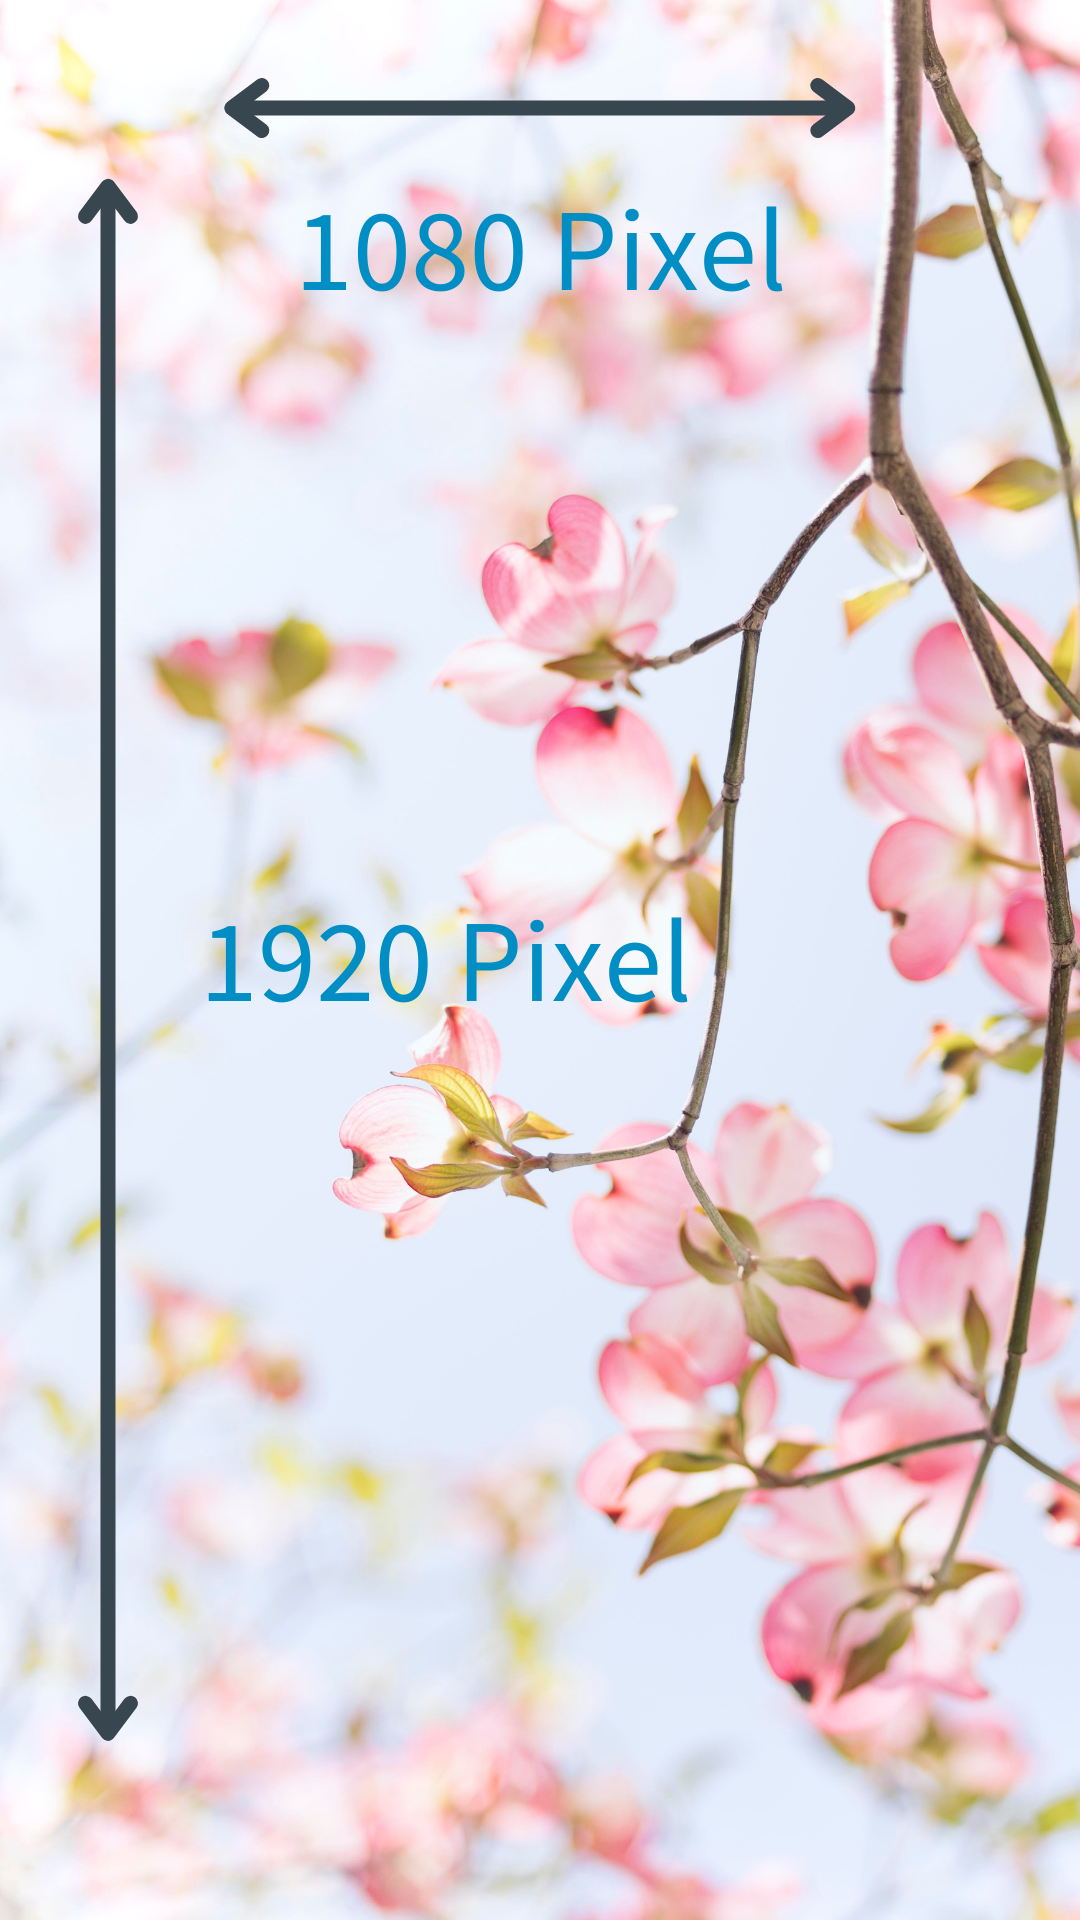 Instagram Story 1080 x 1920 Pixel